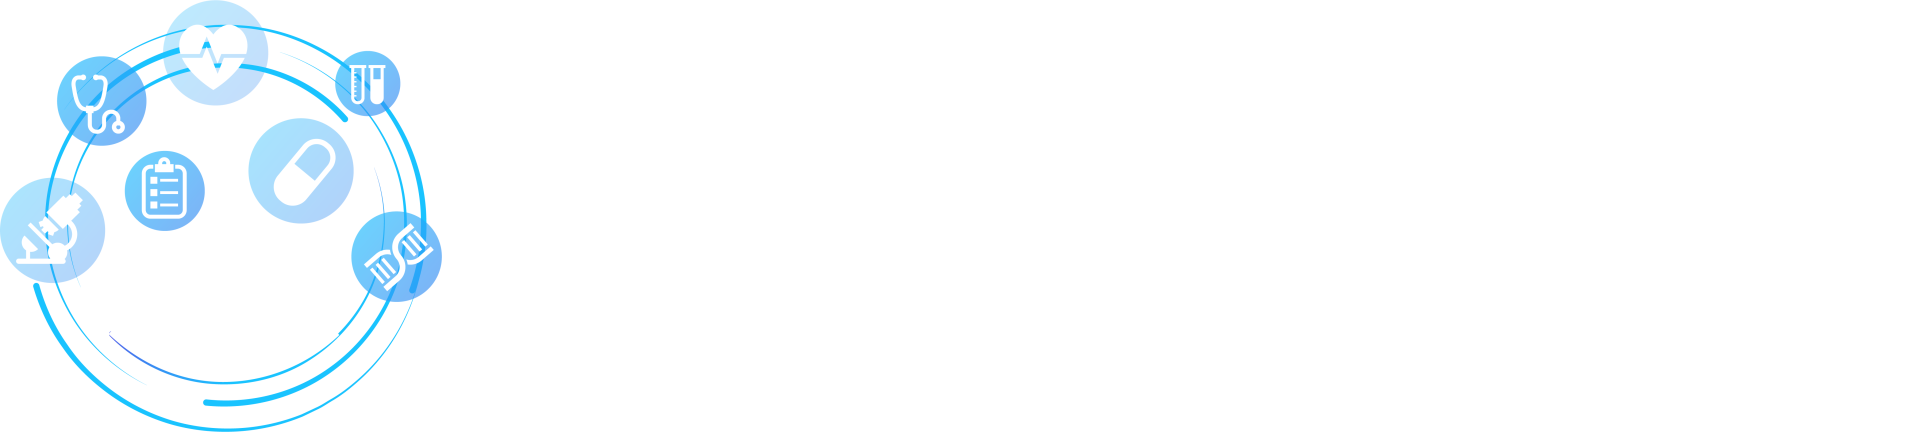 Measuring Patient Engagement Logo - white